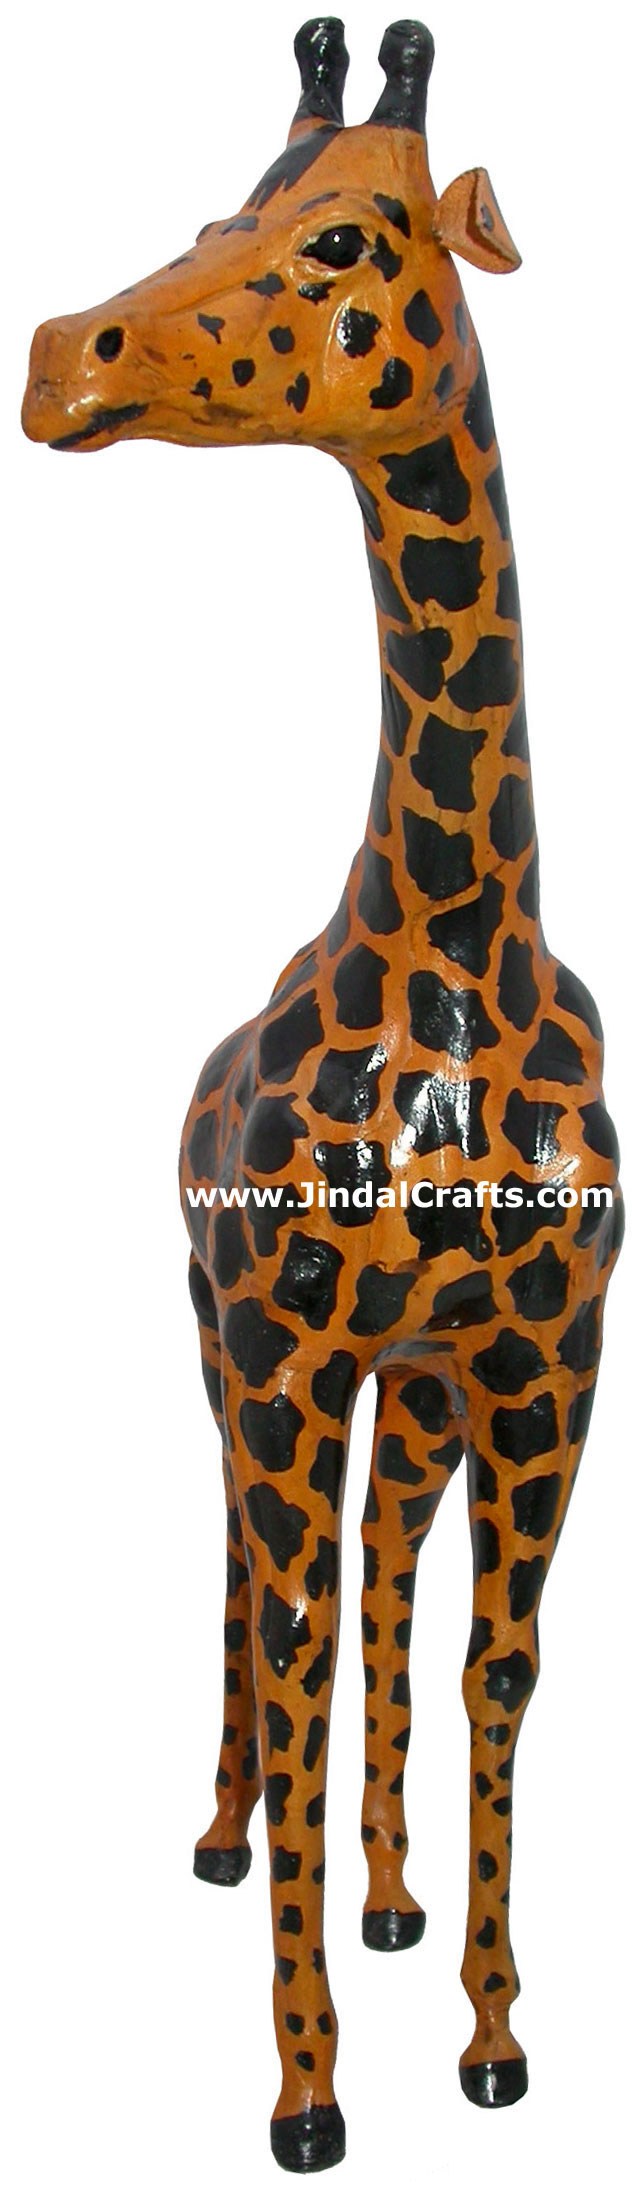 Giraffe Handmade Stuffed Leather Animals Toys India Art